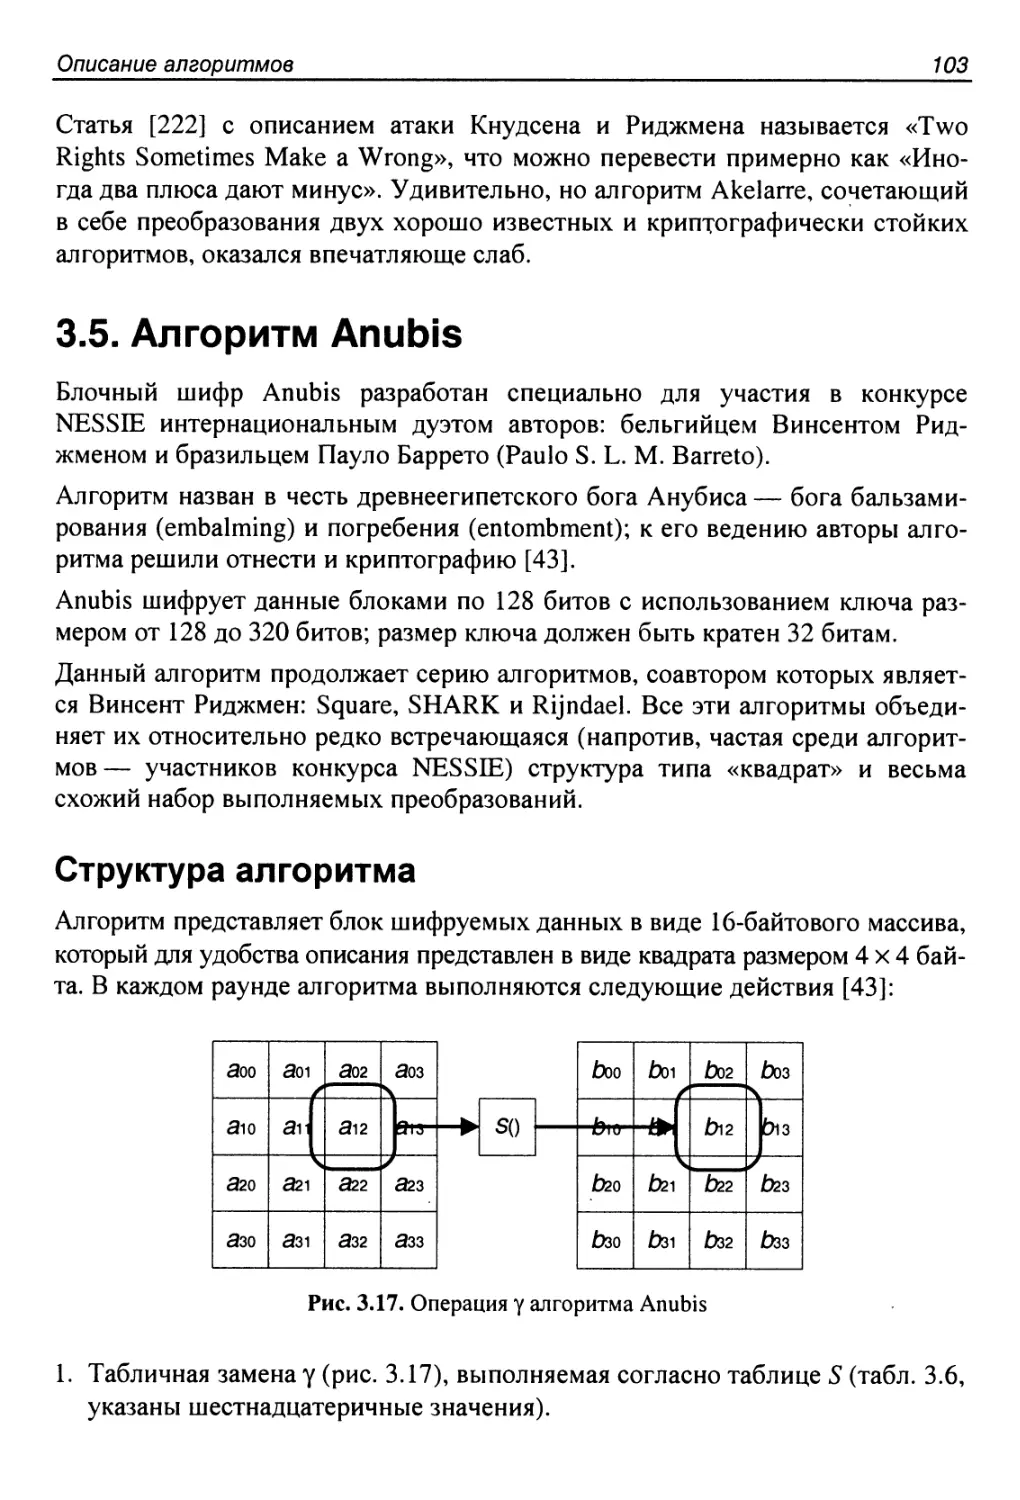 3.5. Алгоритм Anubis